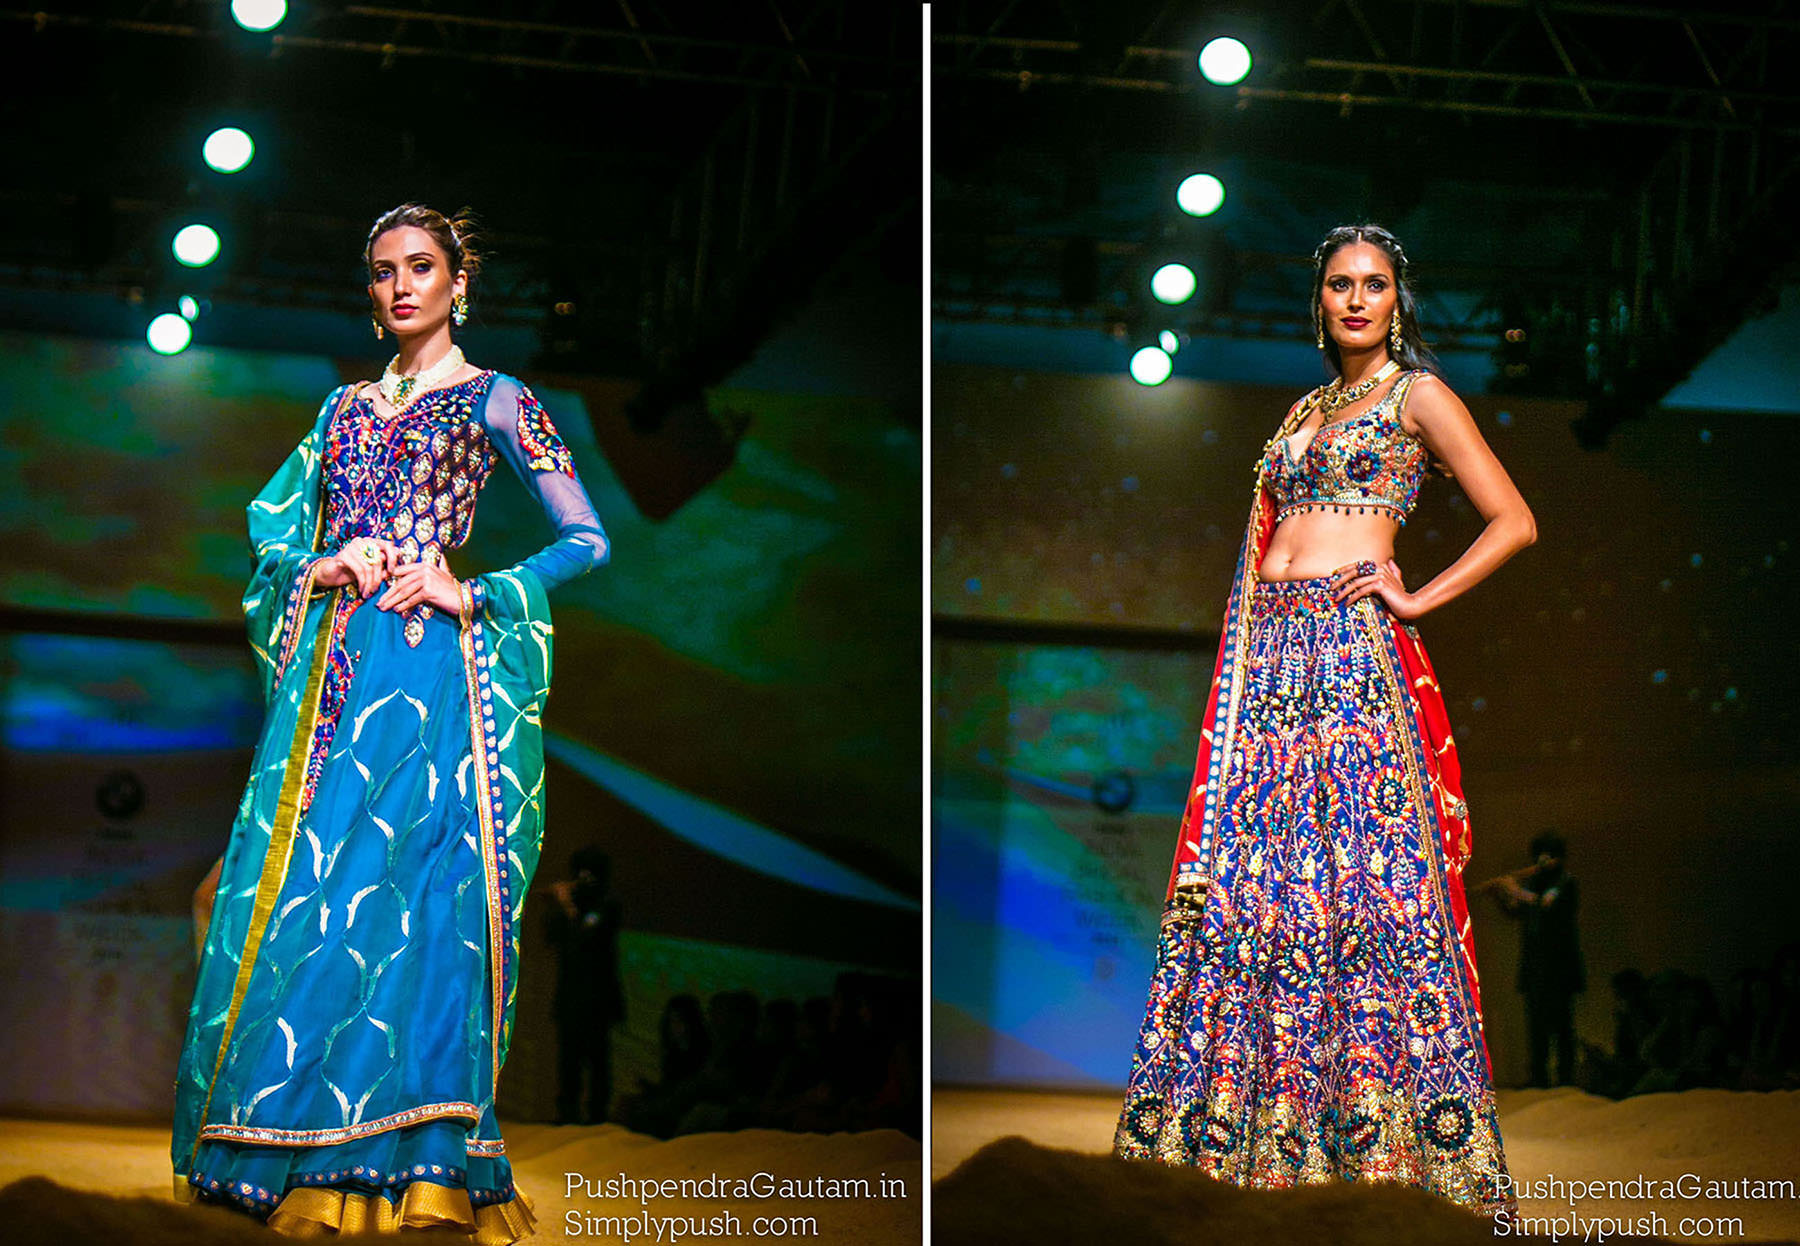 Ujjwala-raut-fashion-week-pics-walking-on-ramp-for-Ashima-Leena-bmw-india-bridal-fashion-week-pushpendragautam-pics-event-photographer-india